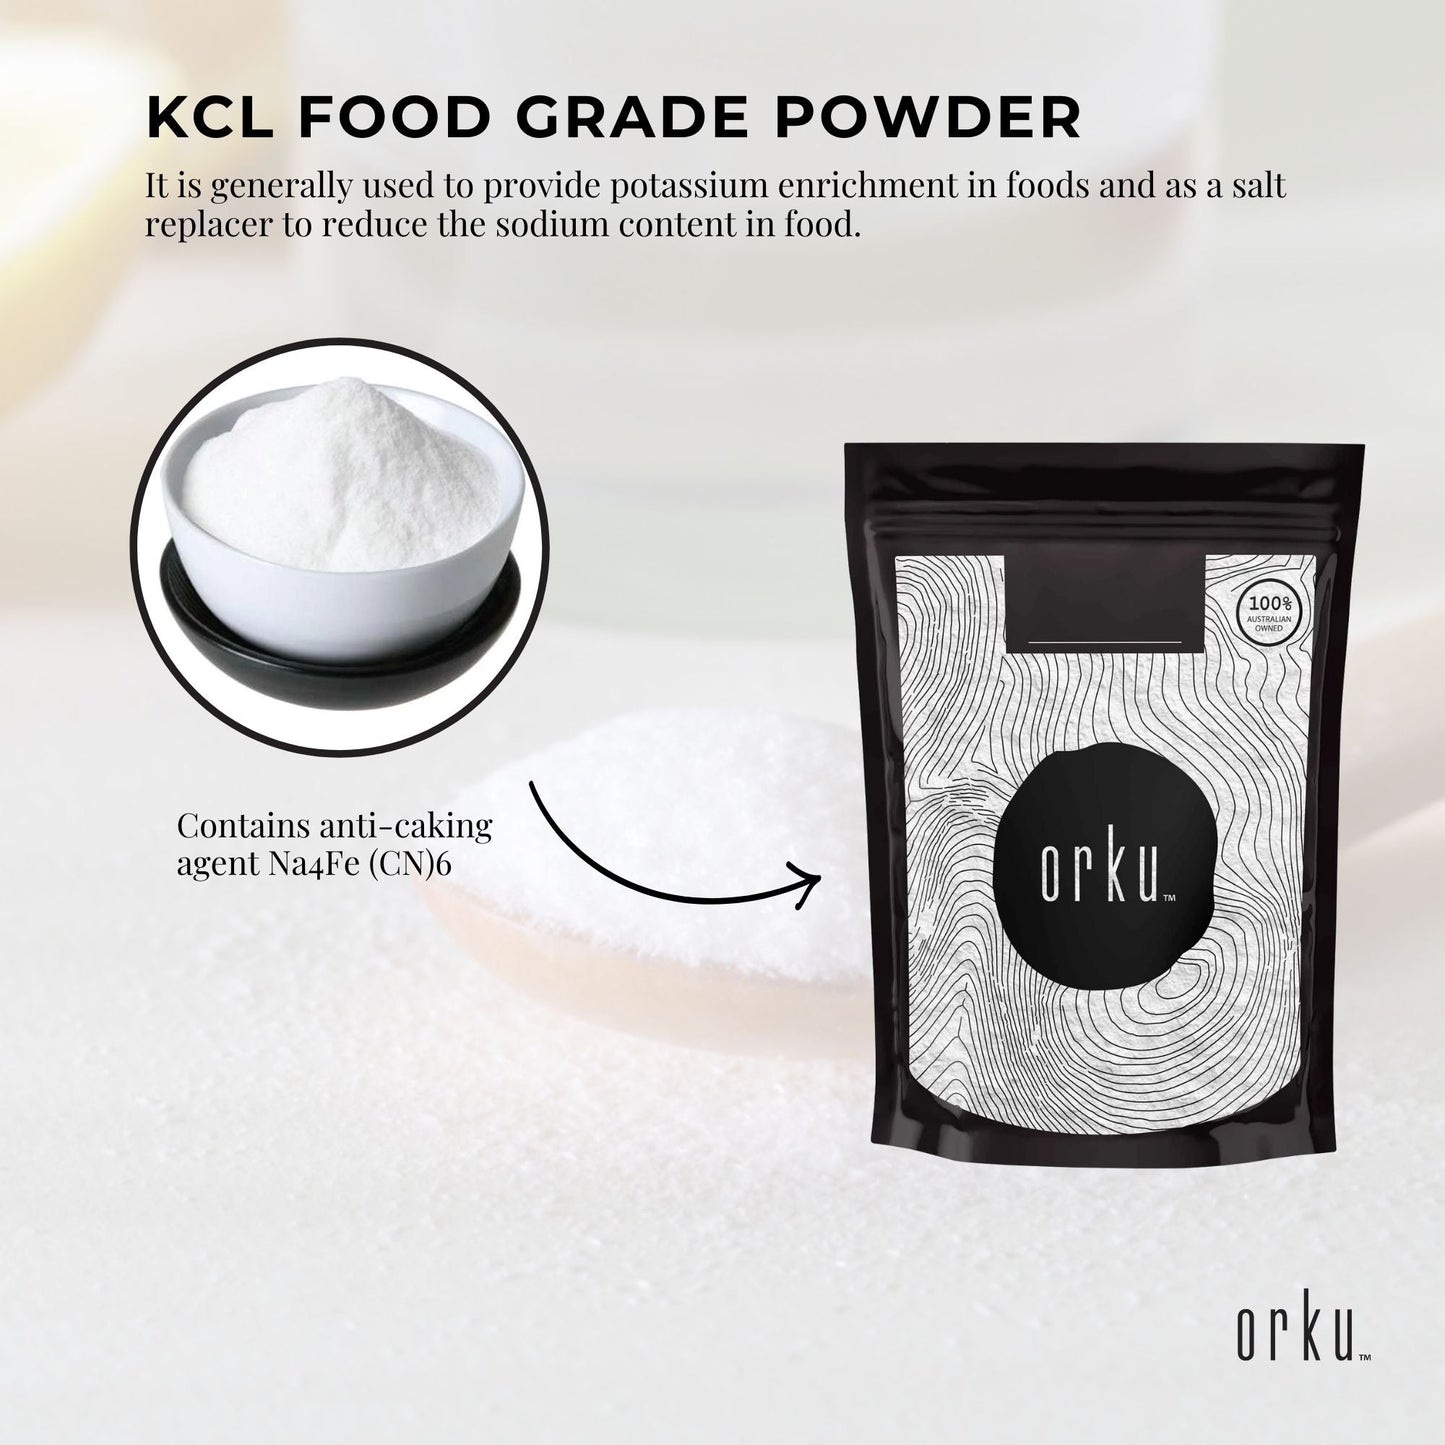 400g Potassium Chloride Powder - Pure E508 Food Grade Salt Substitute Supplement